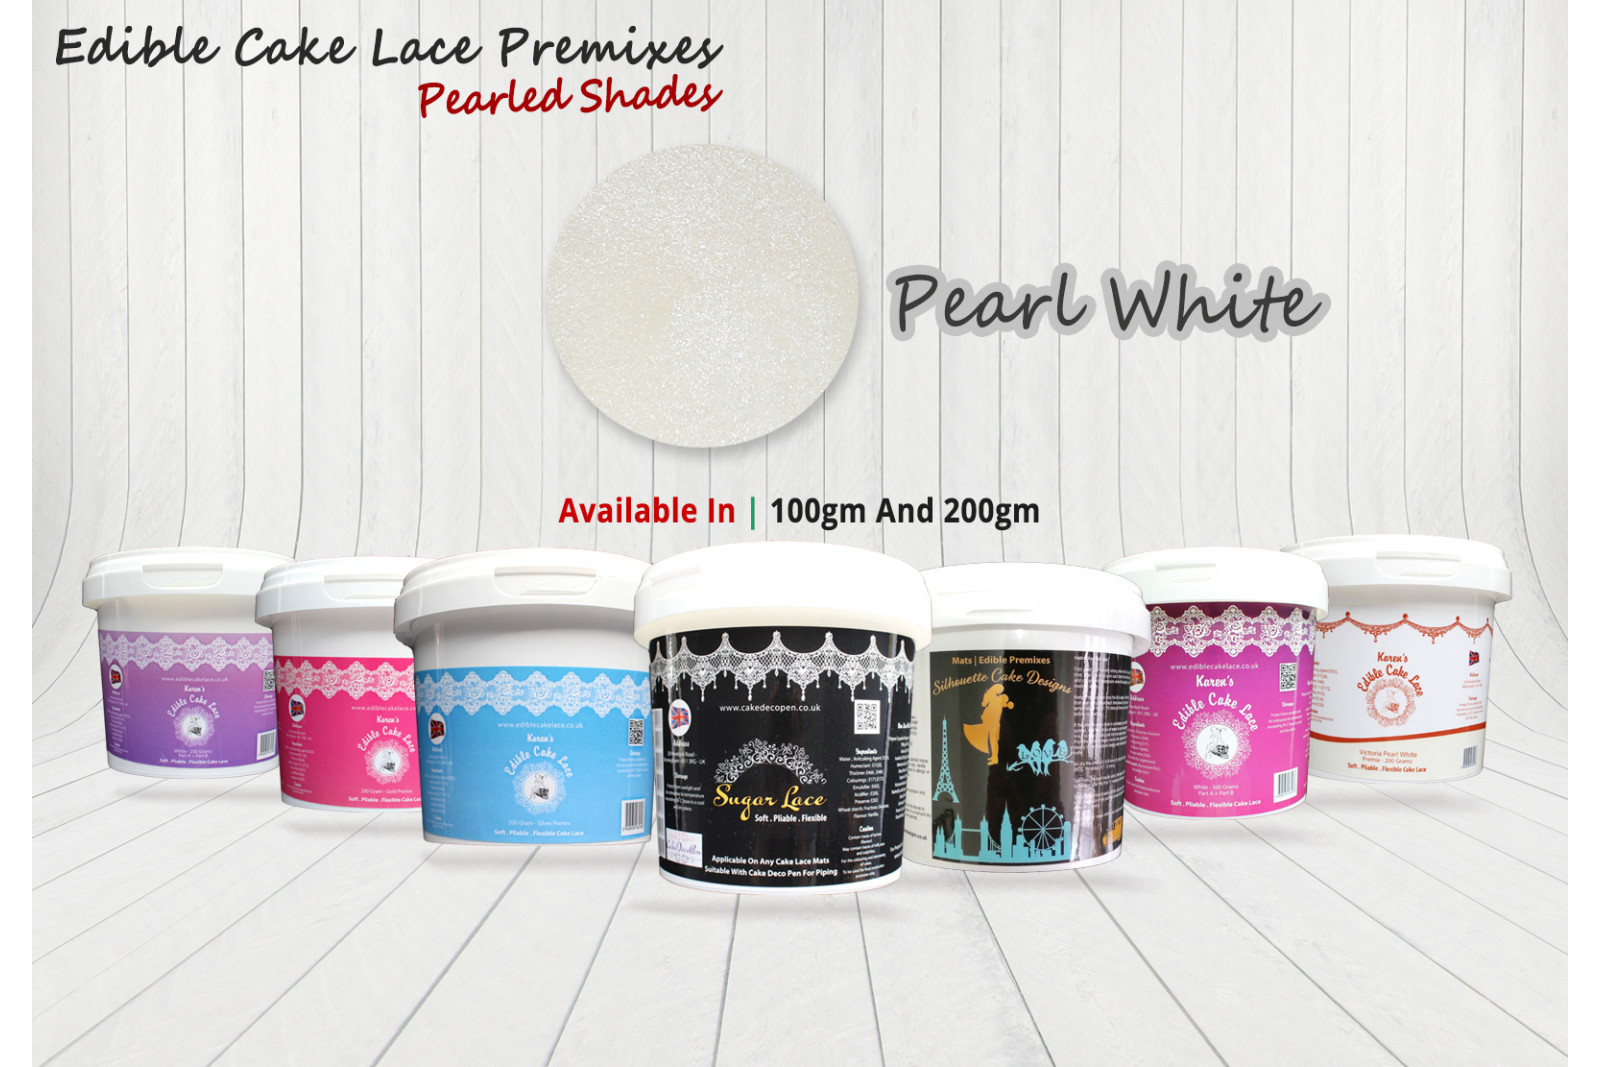 Pearl White | Edible Sugar Lace Deco Pen | Pearled Shade | 200 Grams